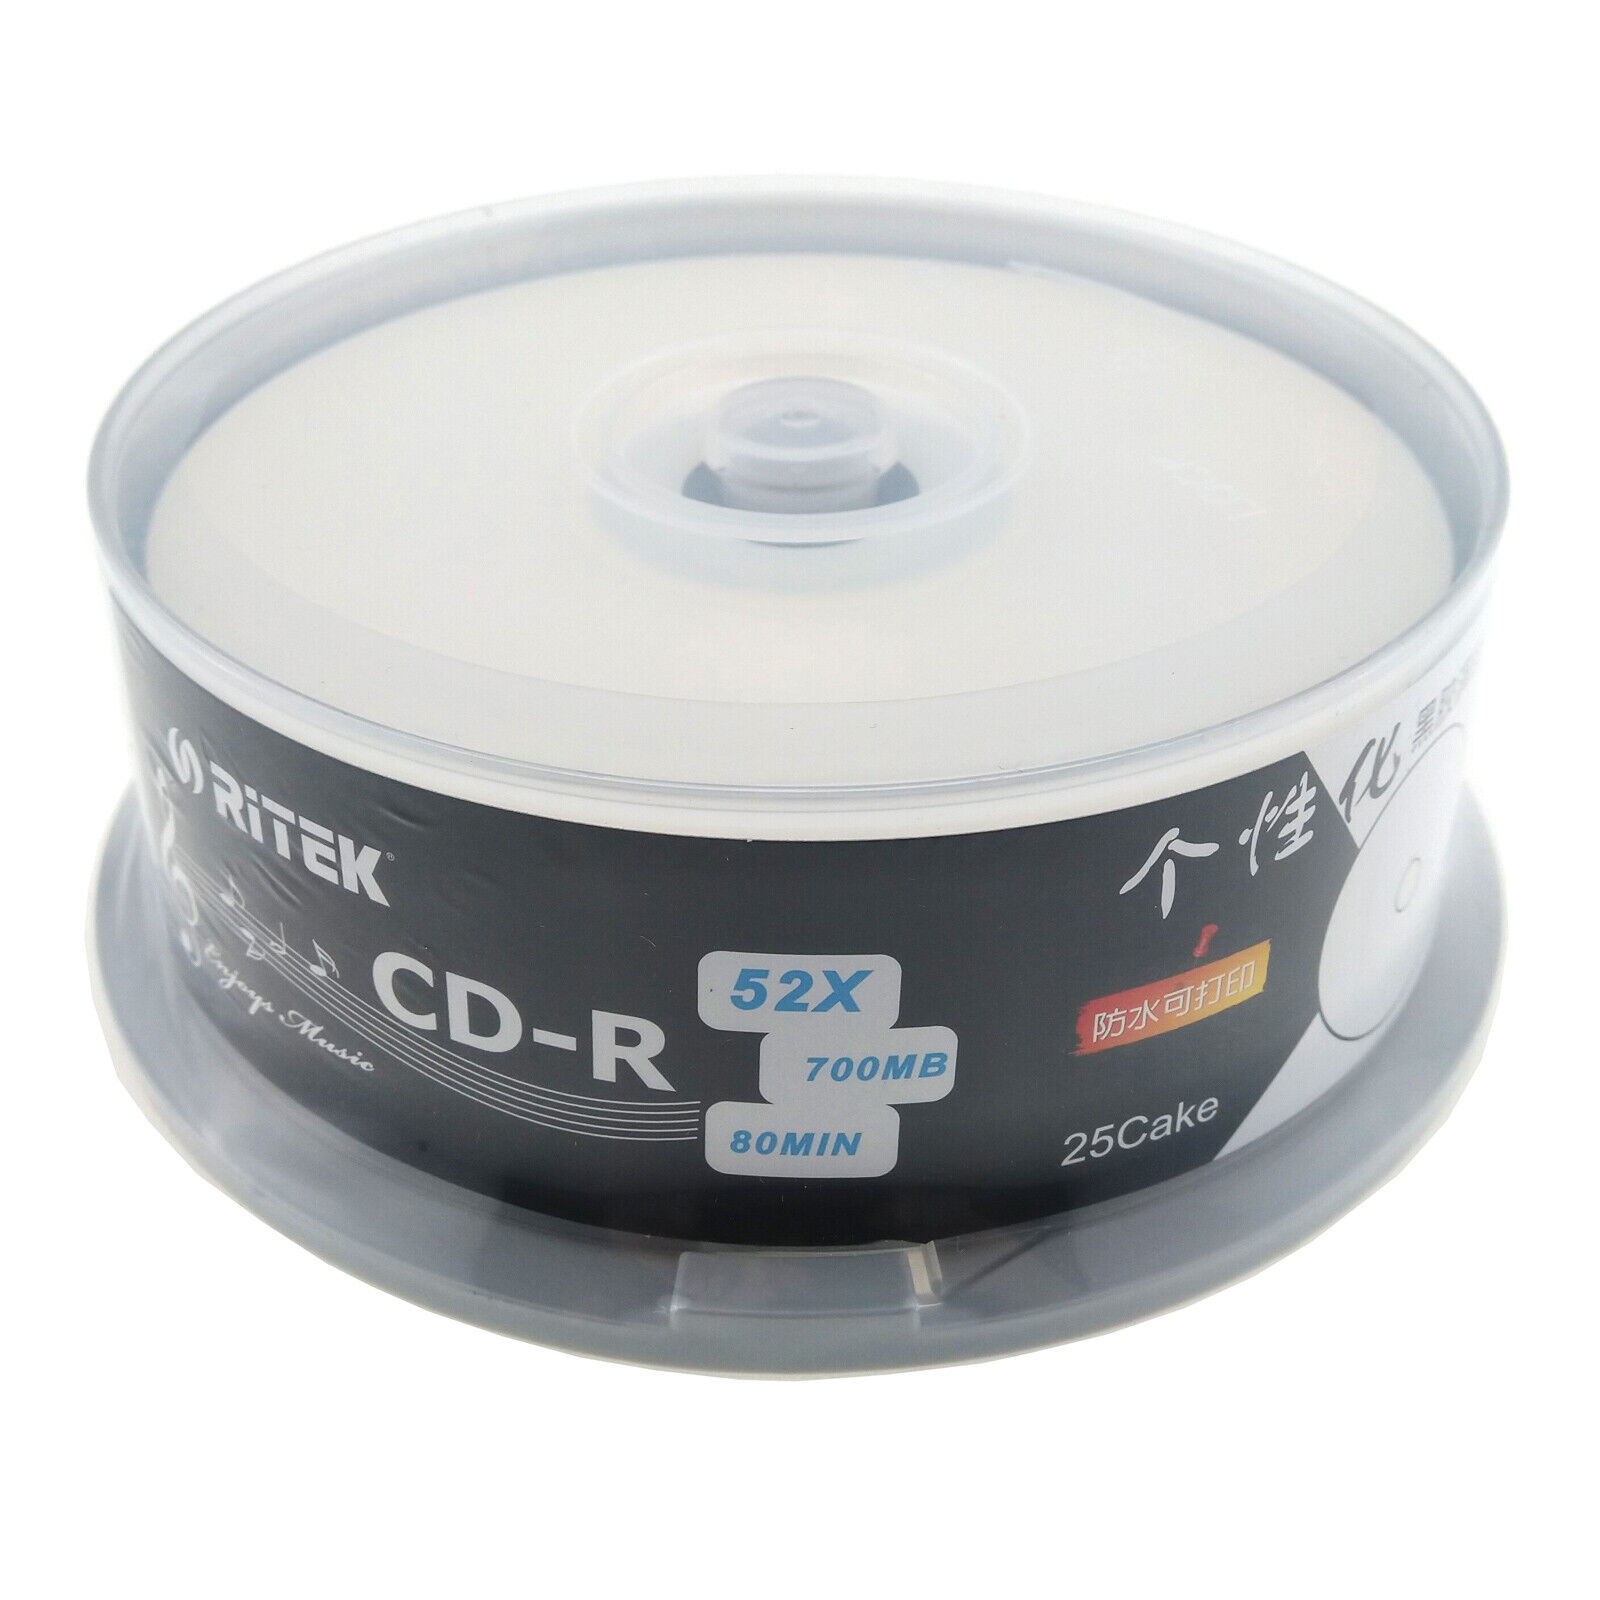 25pcs CD-R Blank Disc 700MB 52X Inkjet Printable Black Bottom Recordable 80min